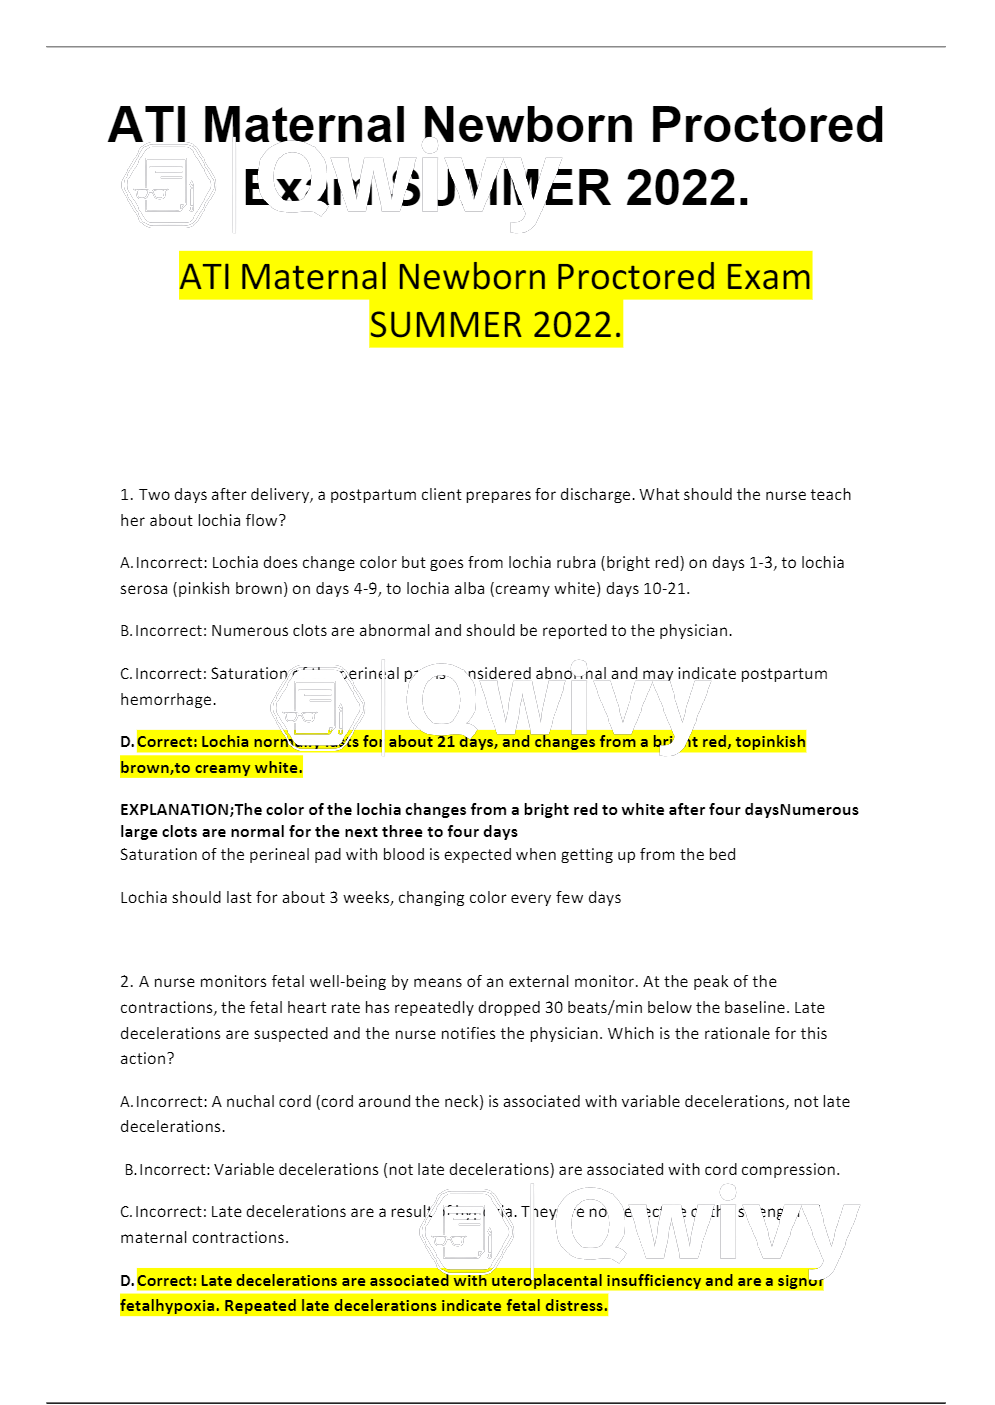 ATI Maternal Newborn Proctored Exam SUMMER 2022